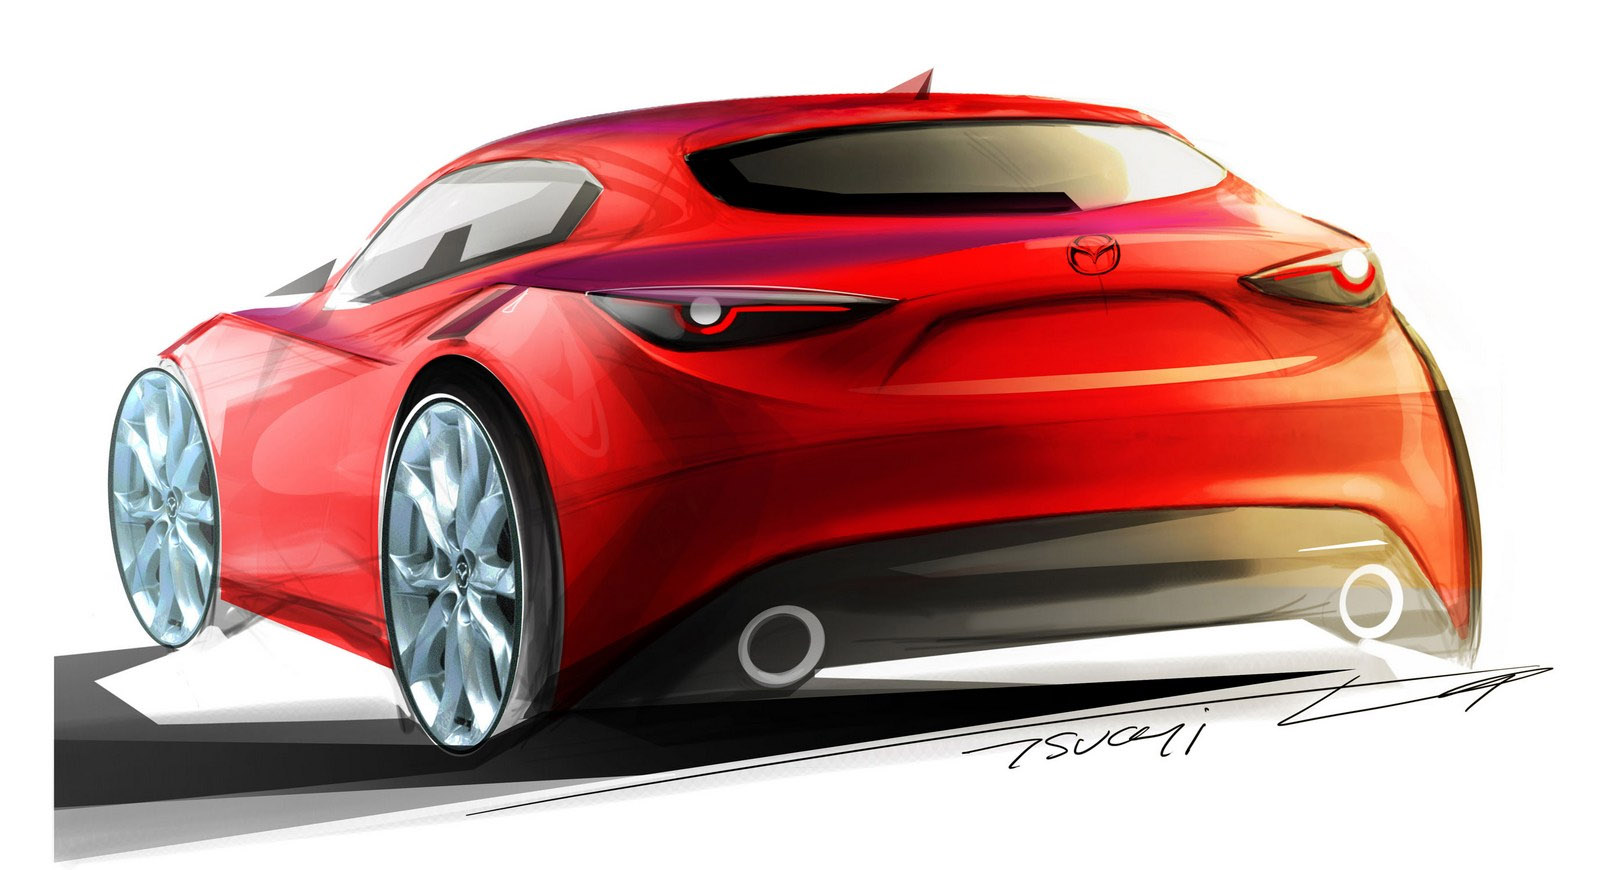 International, mazda 3 concept sketch teaser hcci engine skyactiv: Mazda 3 Concept Menuju Tokyo, Pakai Mesin Tanpa Busi?